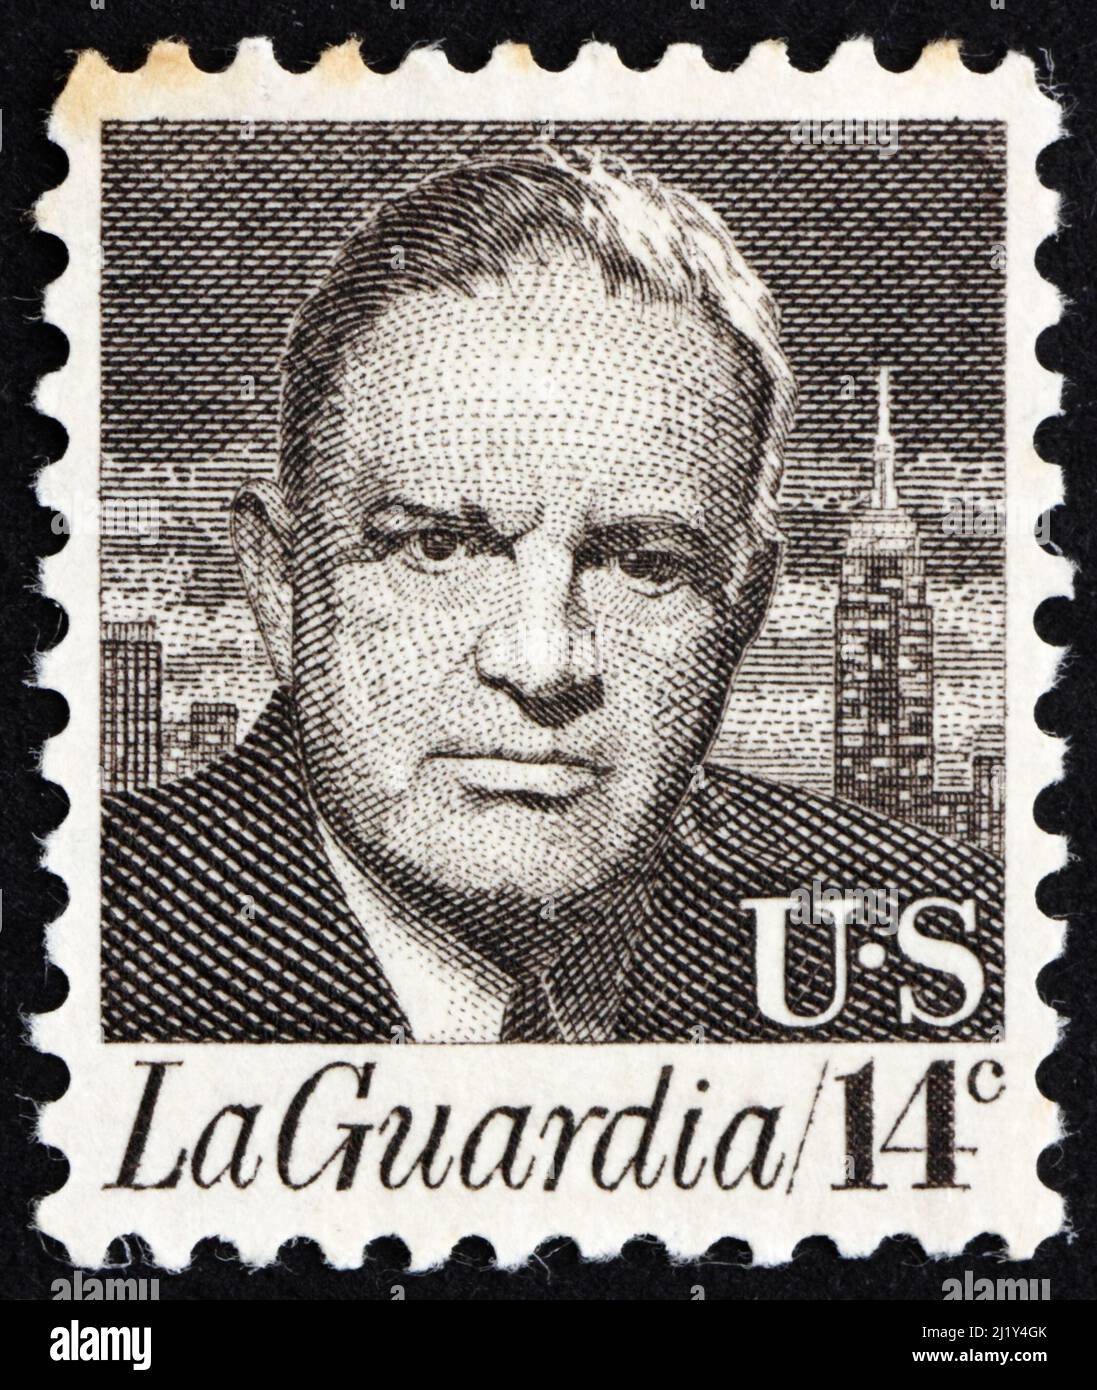 UNITED STATES OF AMERICA - CIRCA 1970: a stamp printed in the United States of America shows Fiorello H. LaGuardia, 99th Mayor of New York City, circa Stock Photo